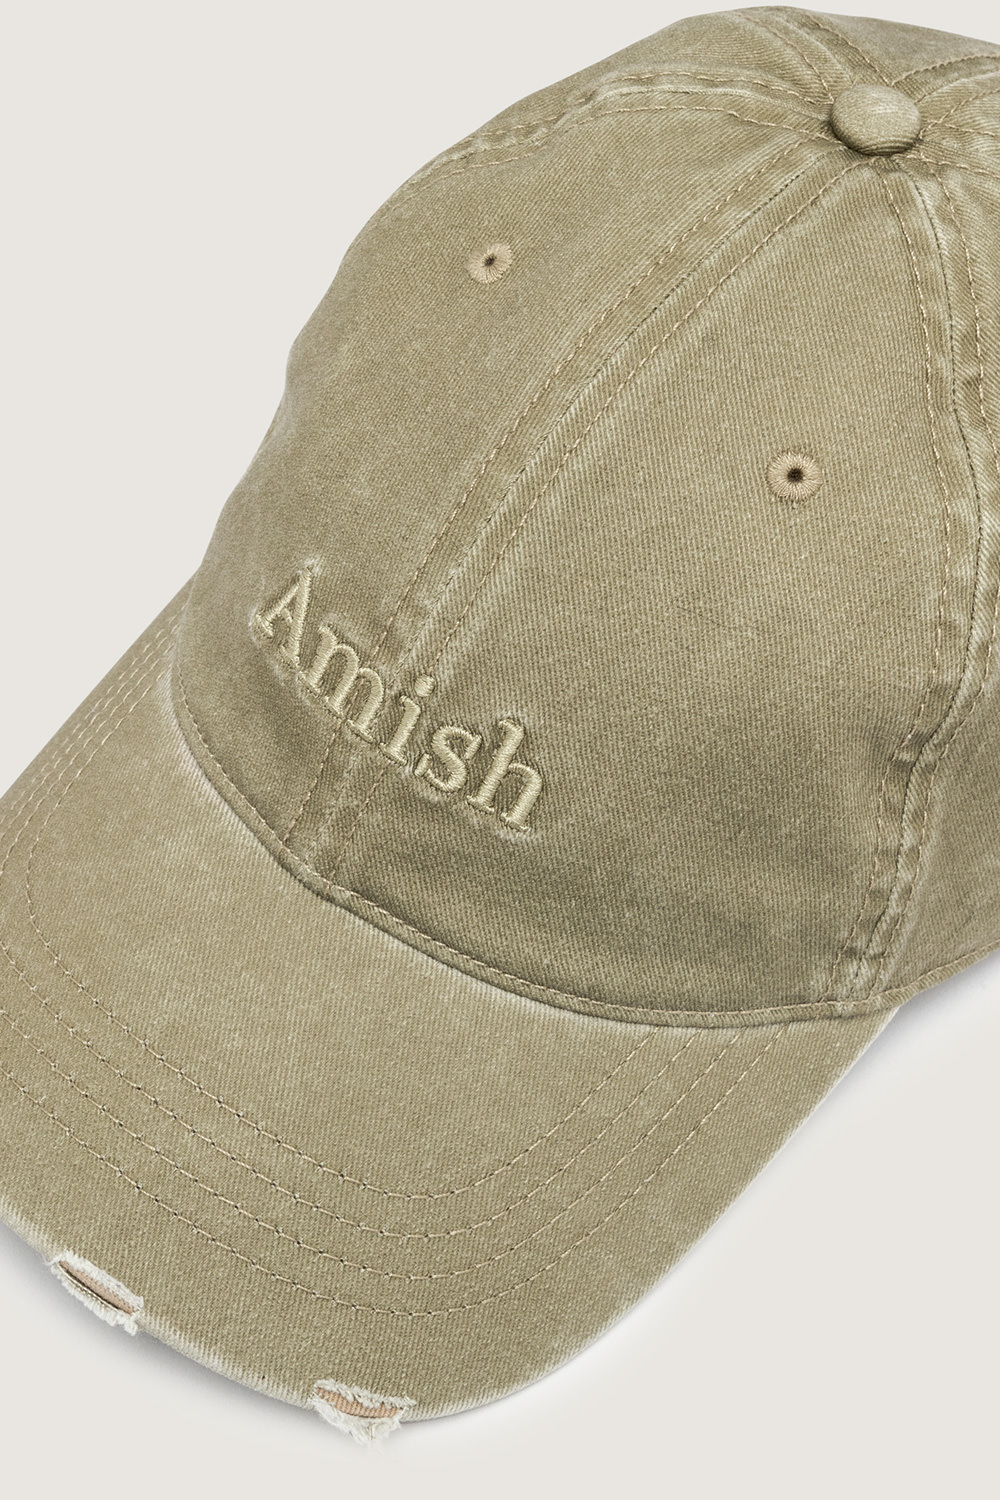 AMISH: BASEBALL CAP IN TWILL